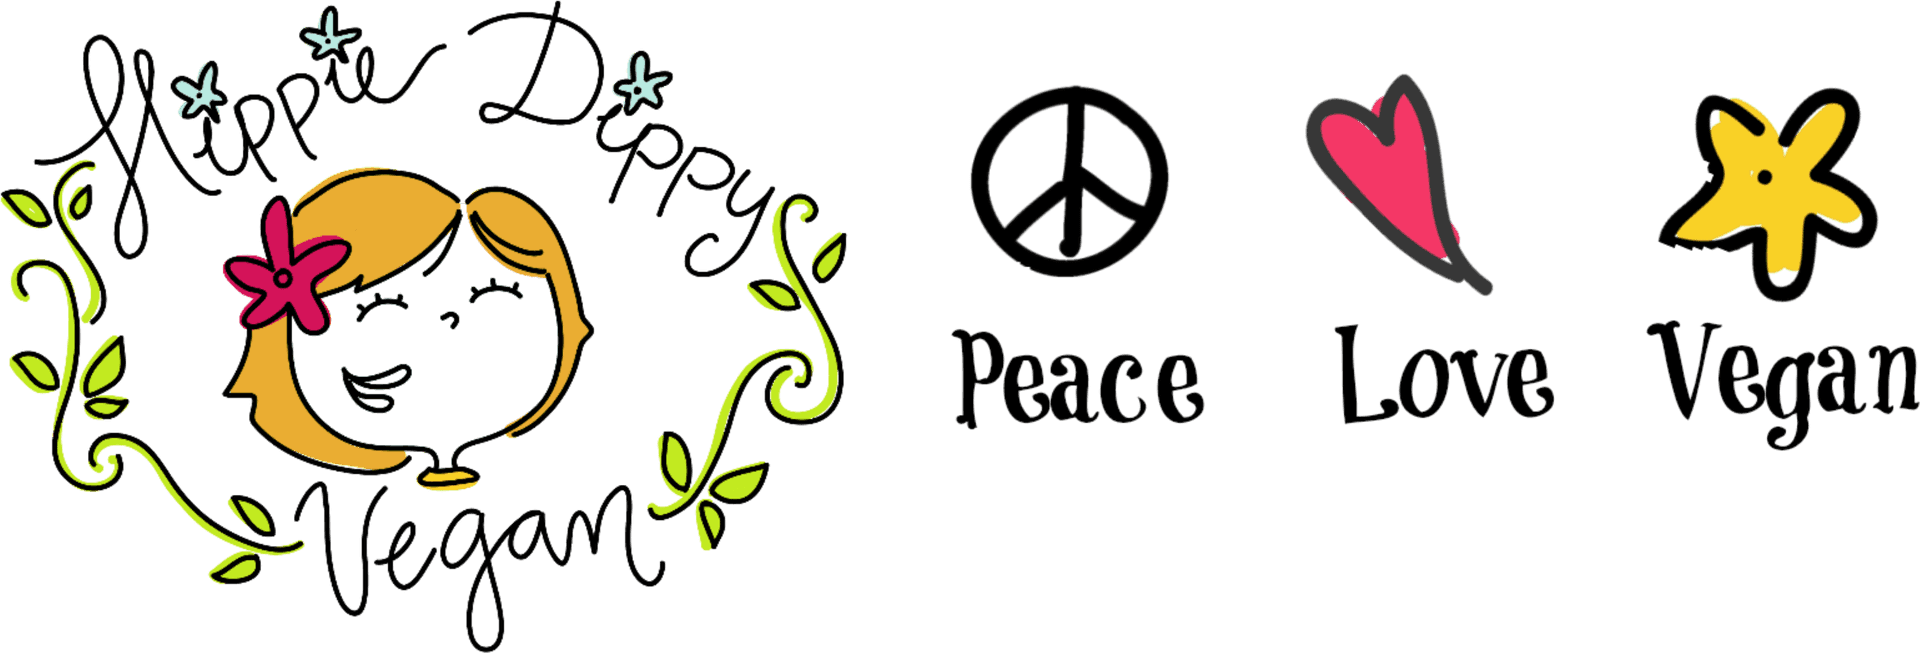 Hippie Dippy Vegan Peace Love PNG image